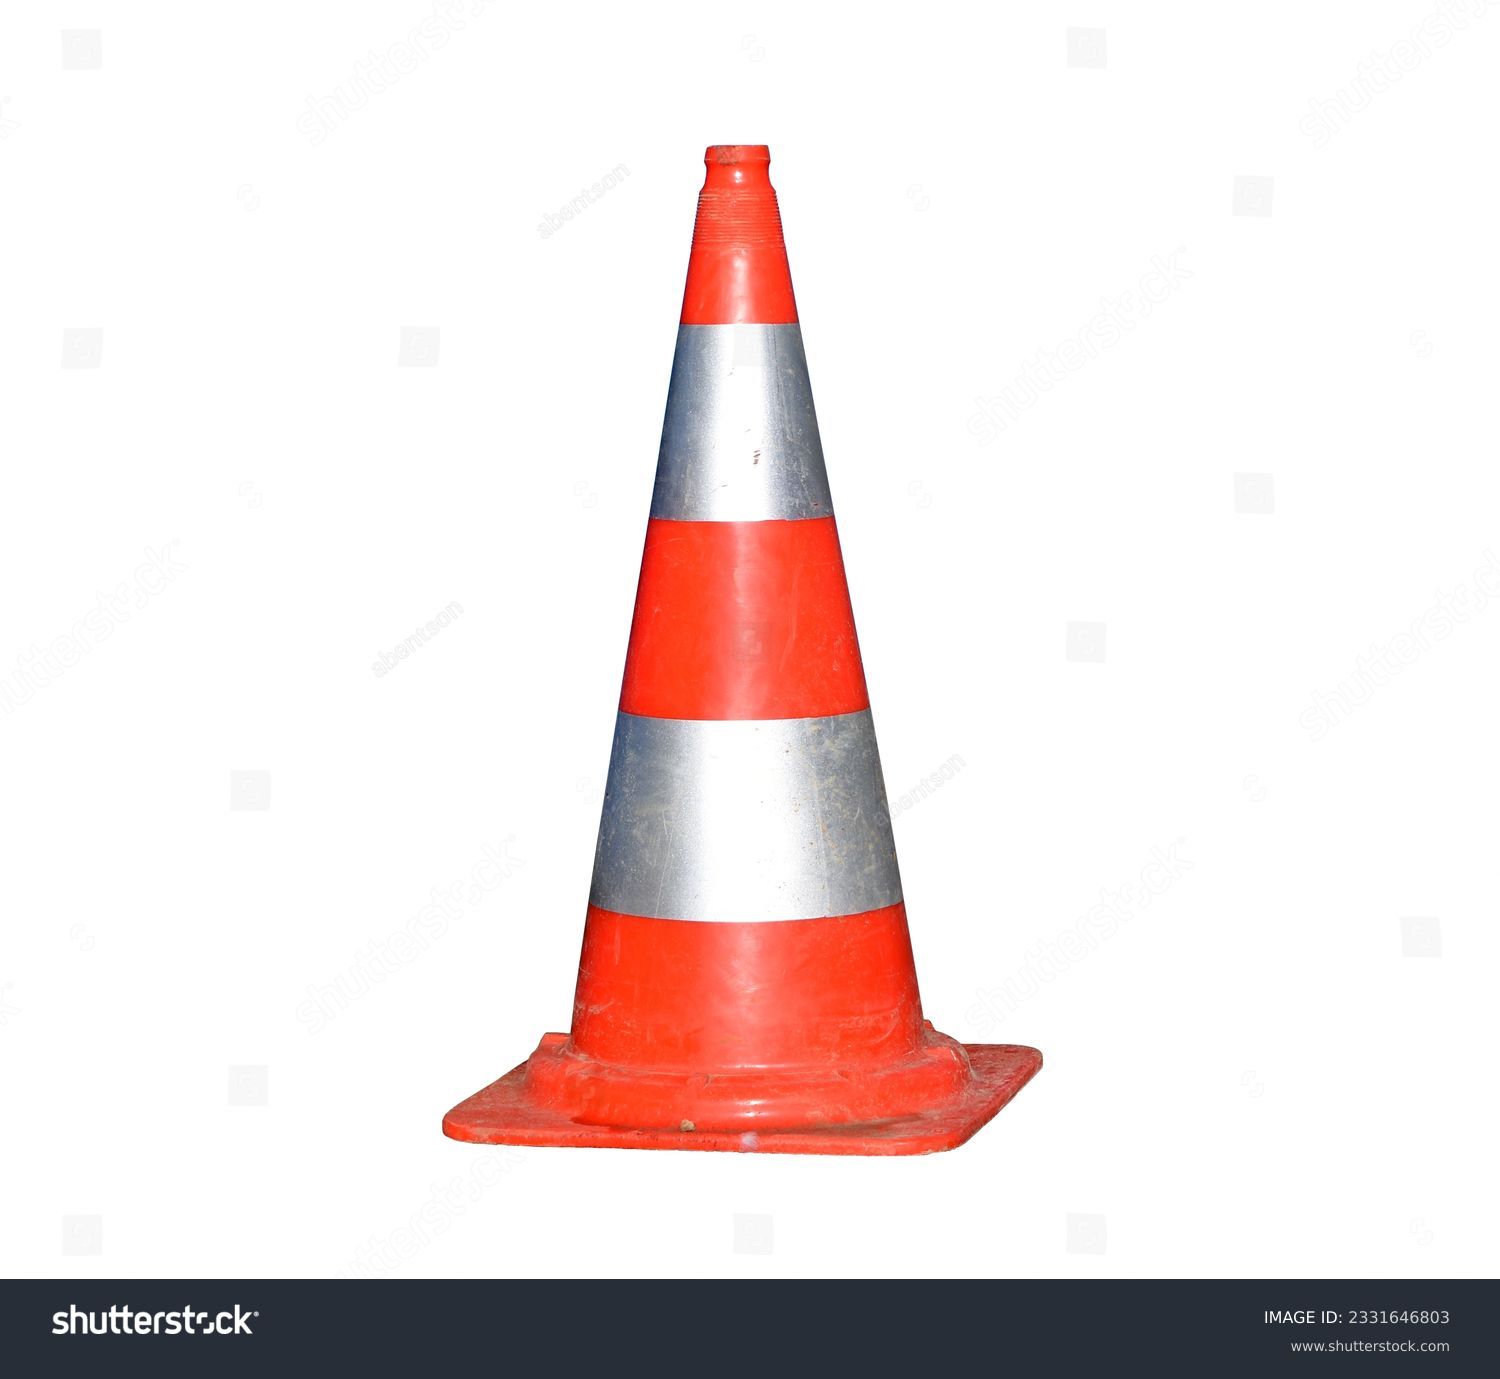 Orange traffic cone isolated on the white background #2331646803